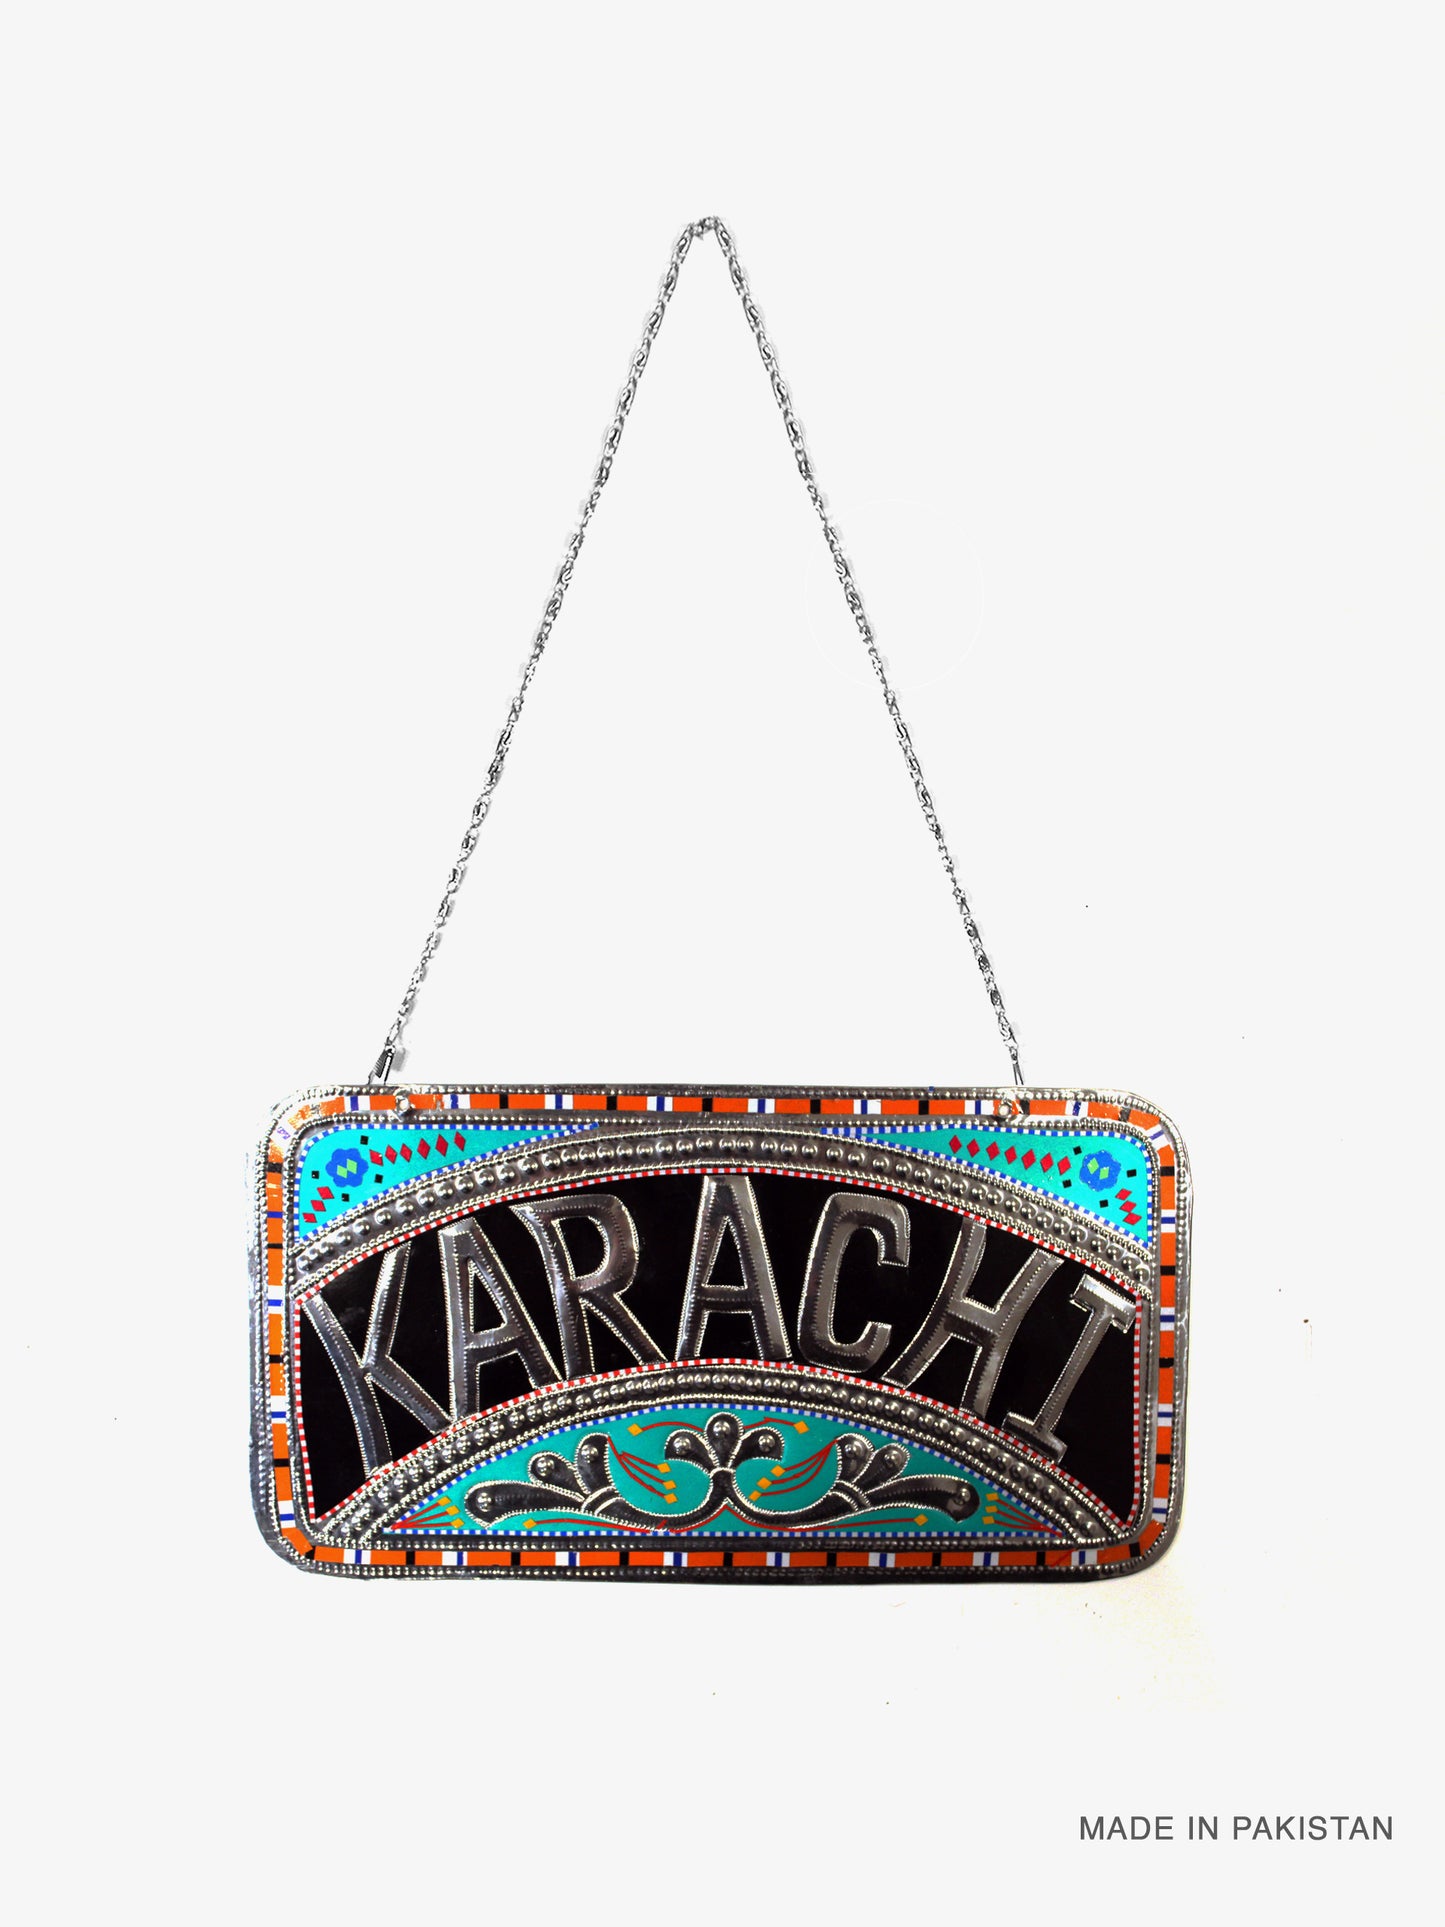 Novelty | "Karachi" Decorative Truck Plate